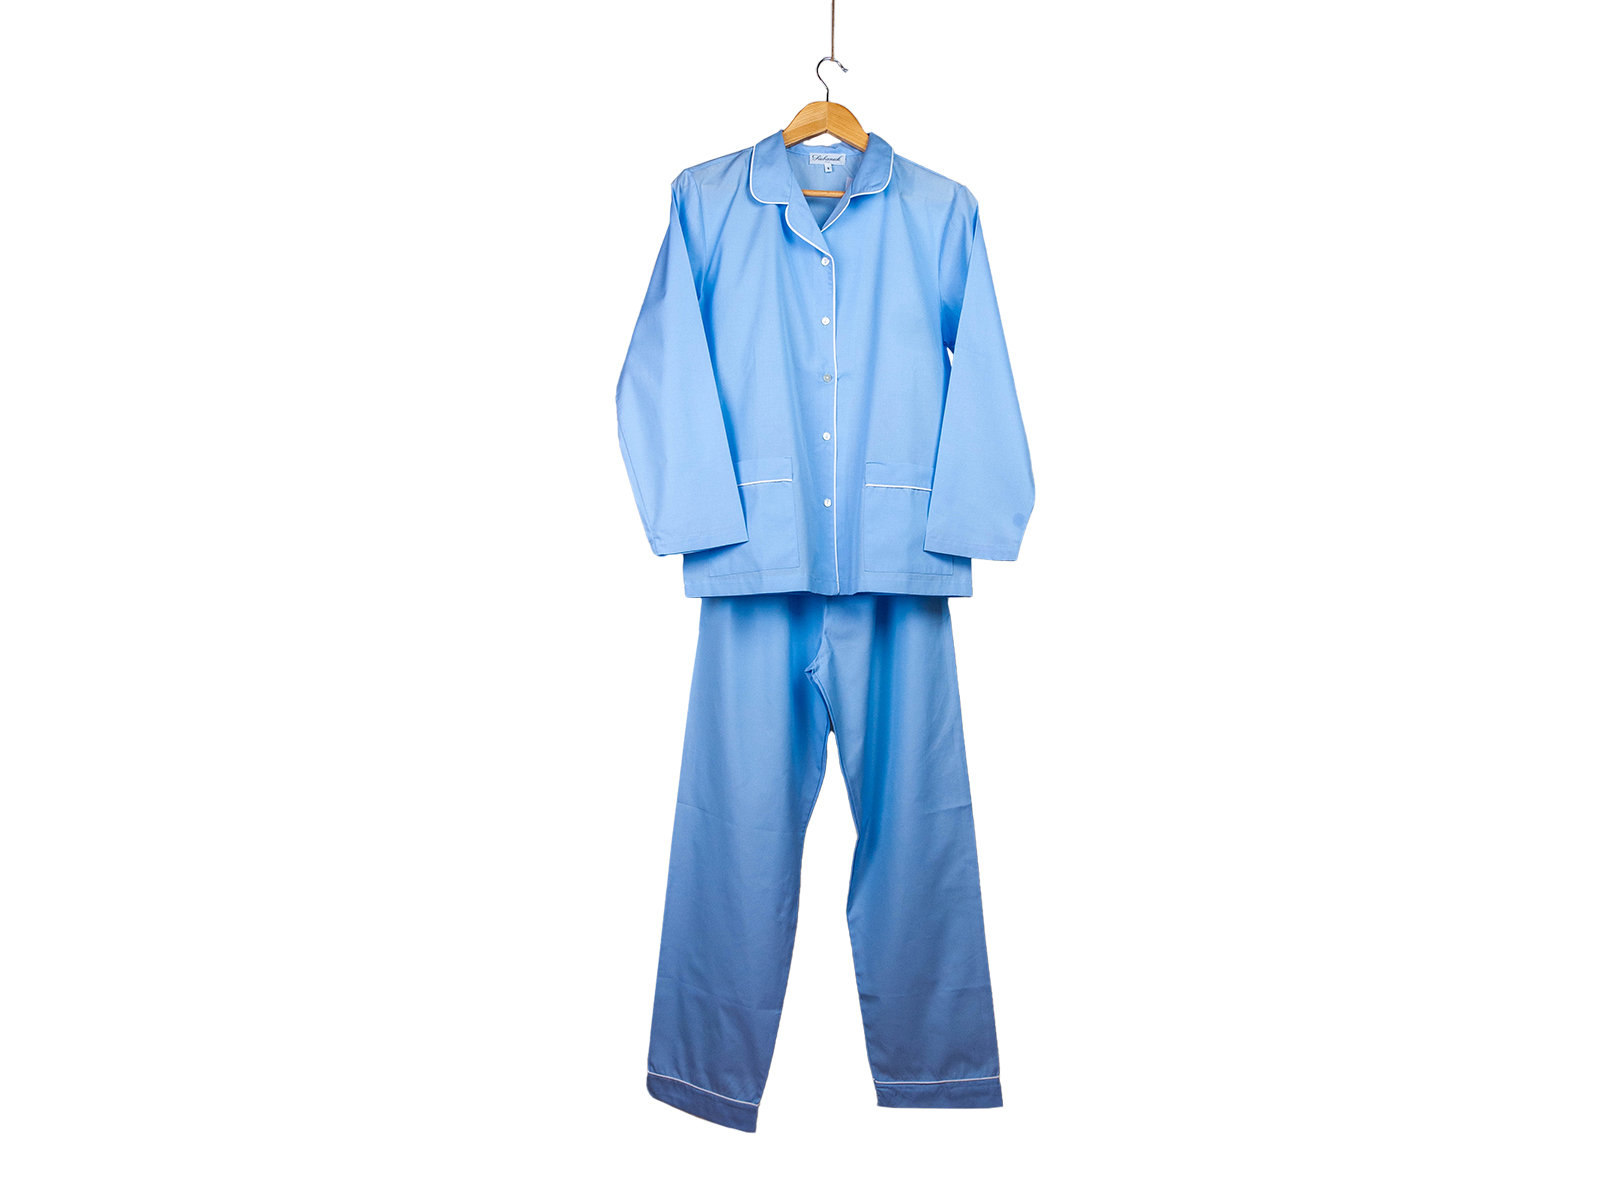 Siebaneck, i pigiami artigianali italiani: - donna- mod.191 azzurro profilo bianco 